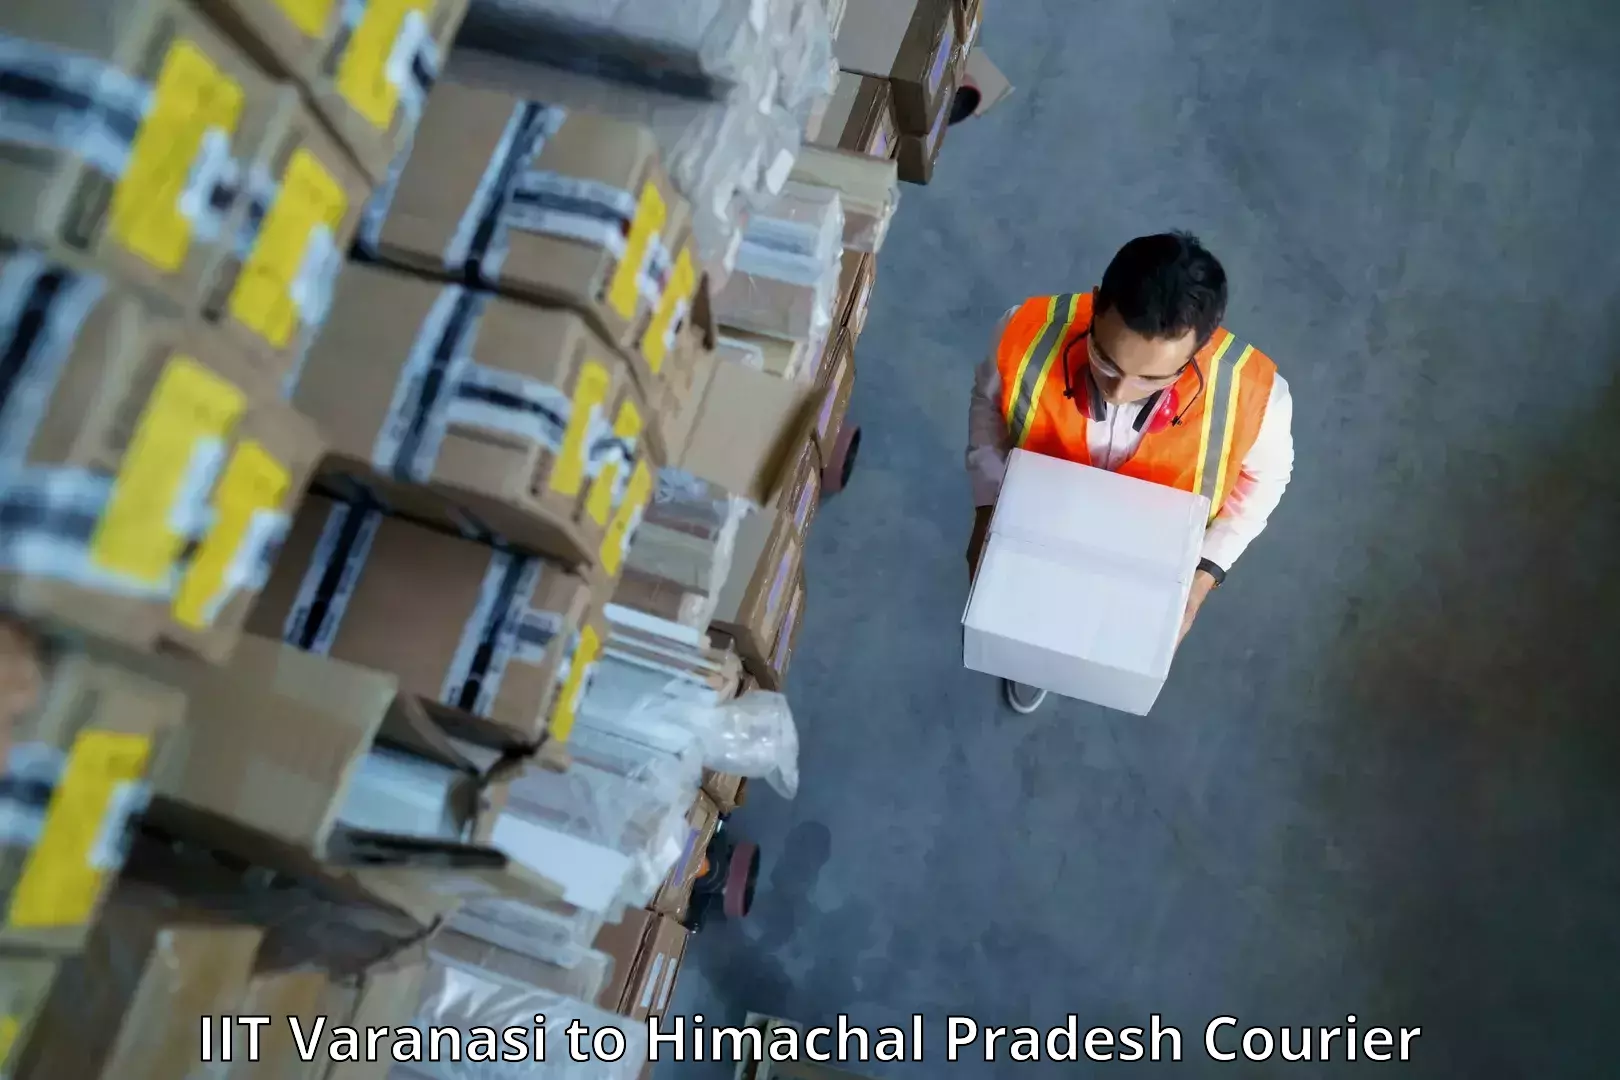 Professional courier handling IIT Varanasi to Bhota